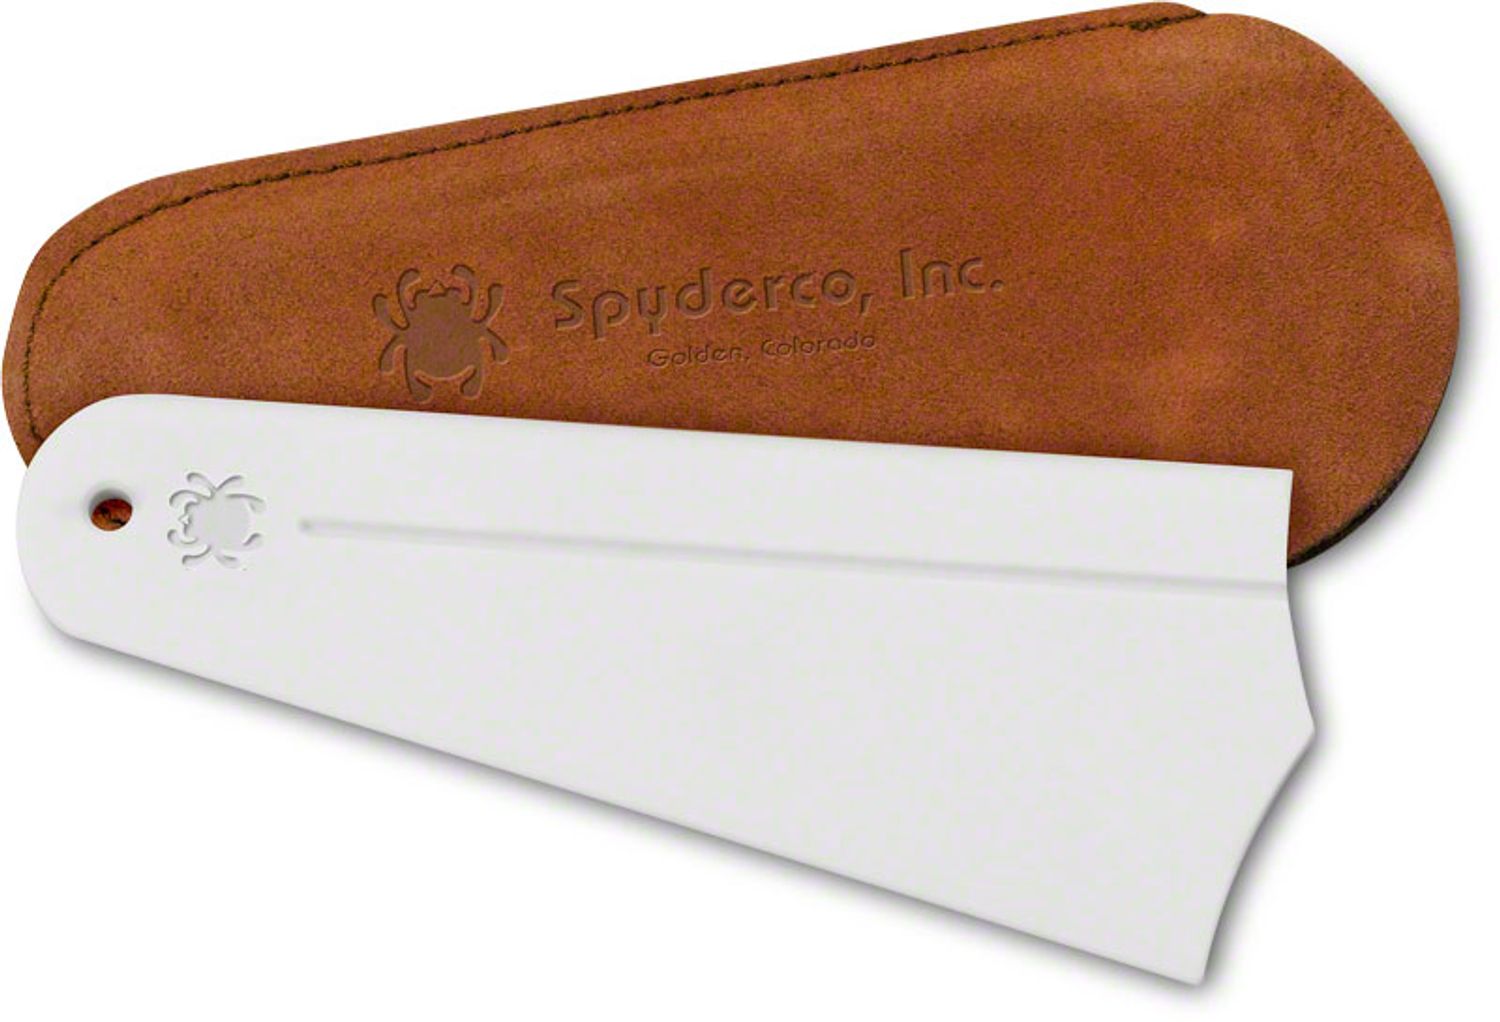 Spyderco Ceramic Sharpening Steel, medium  Advantageously shopping at